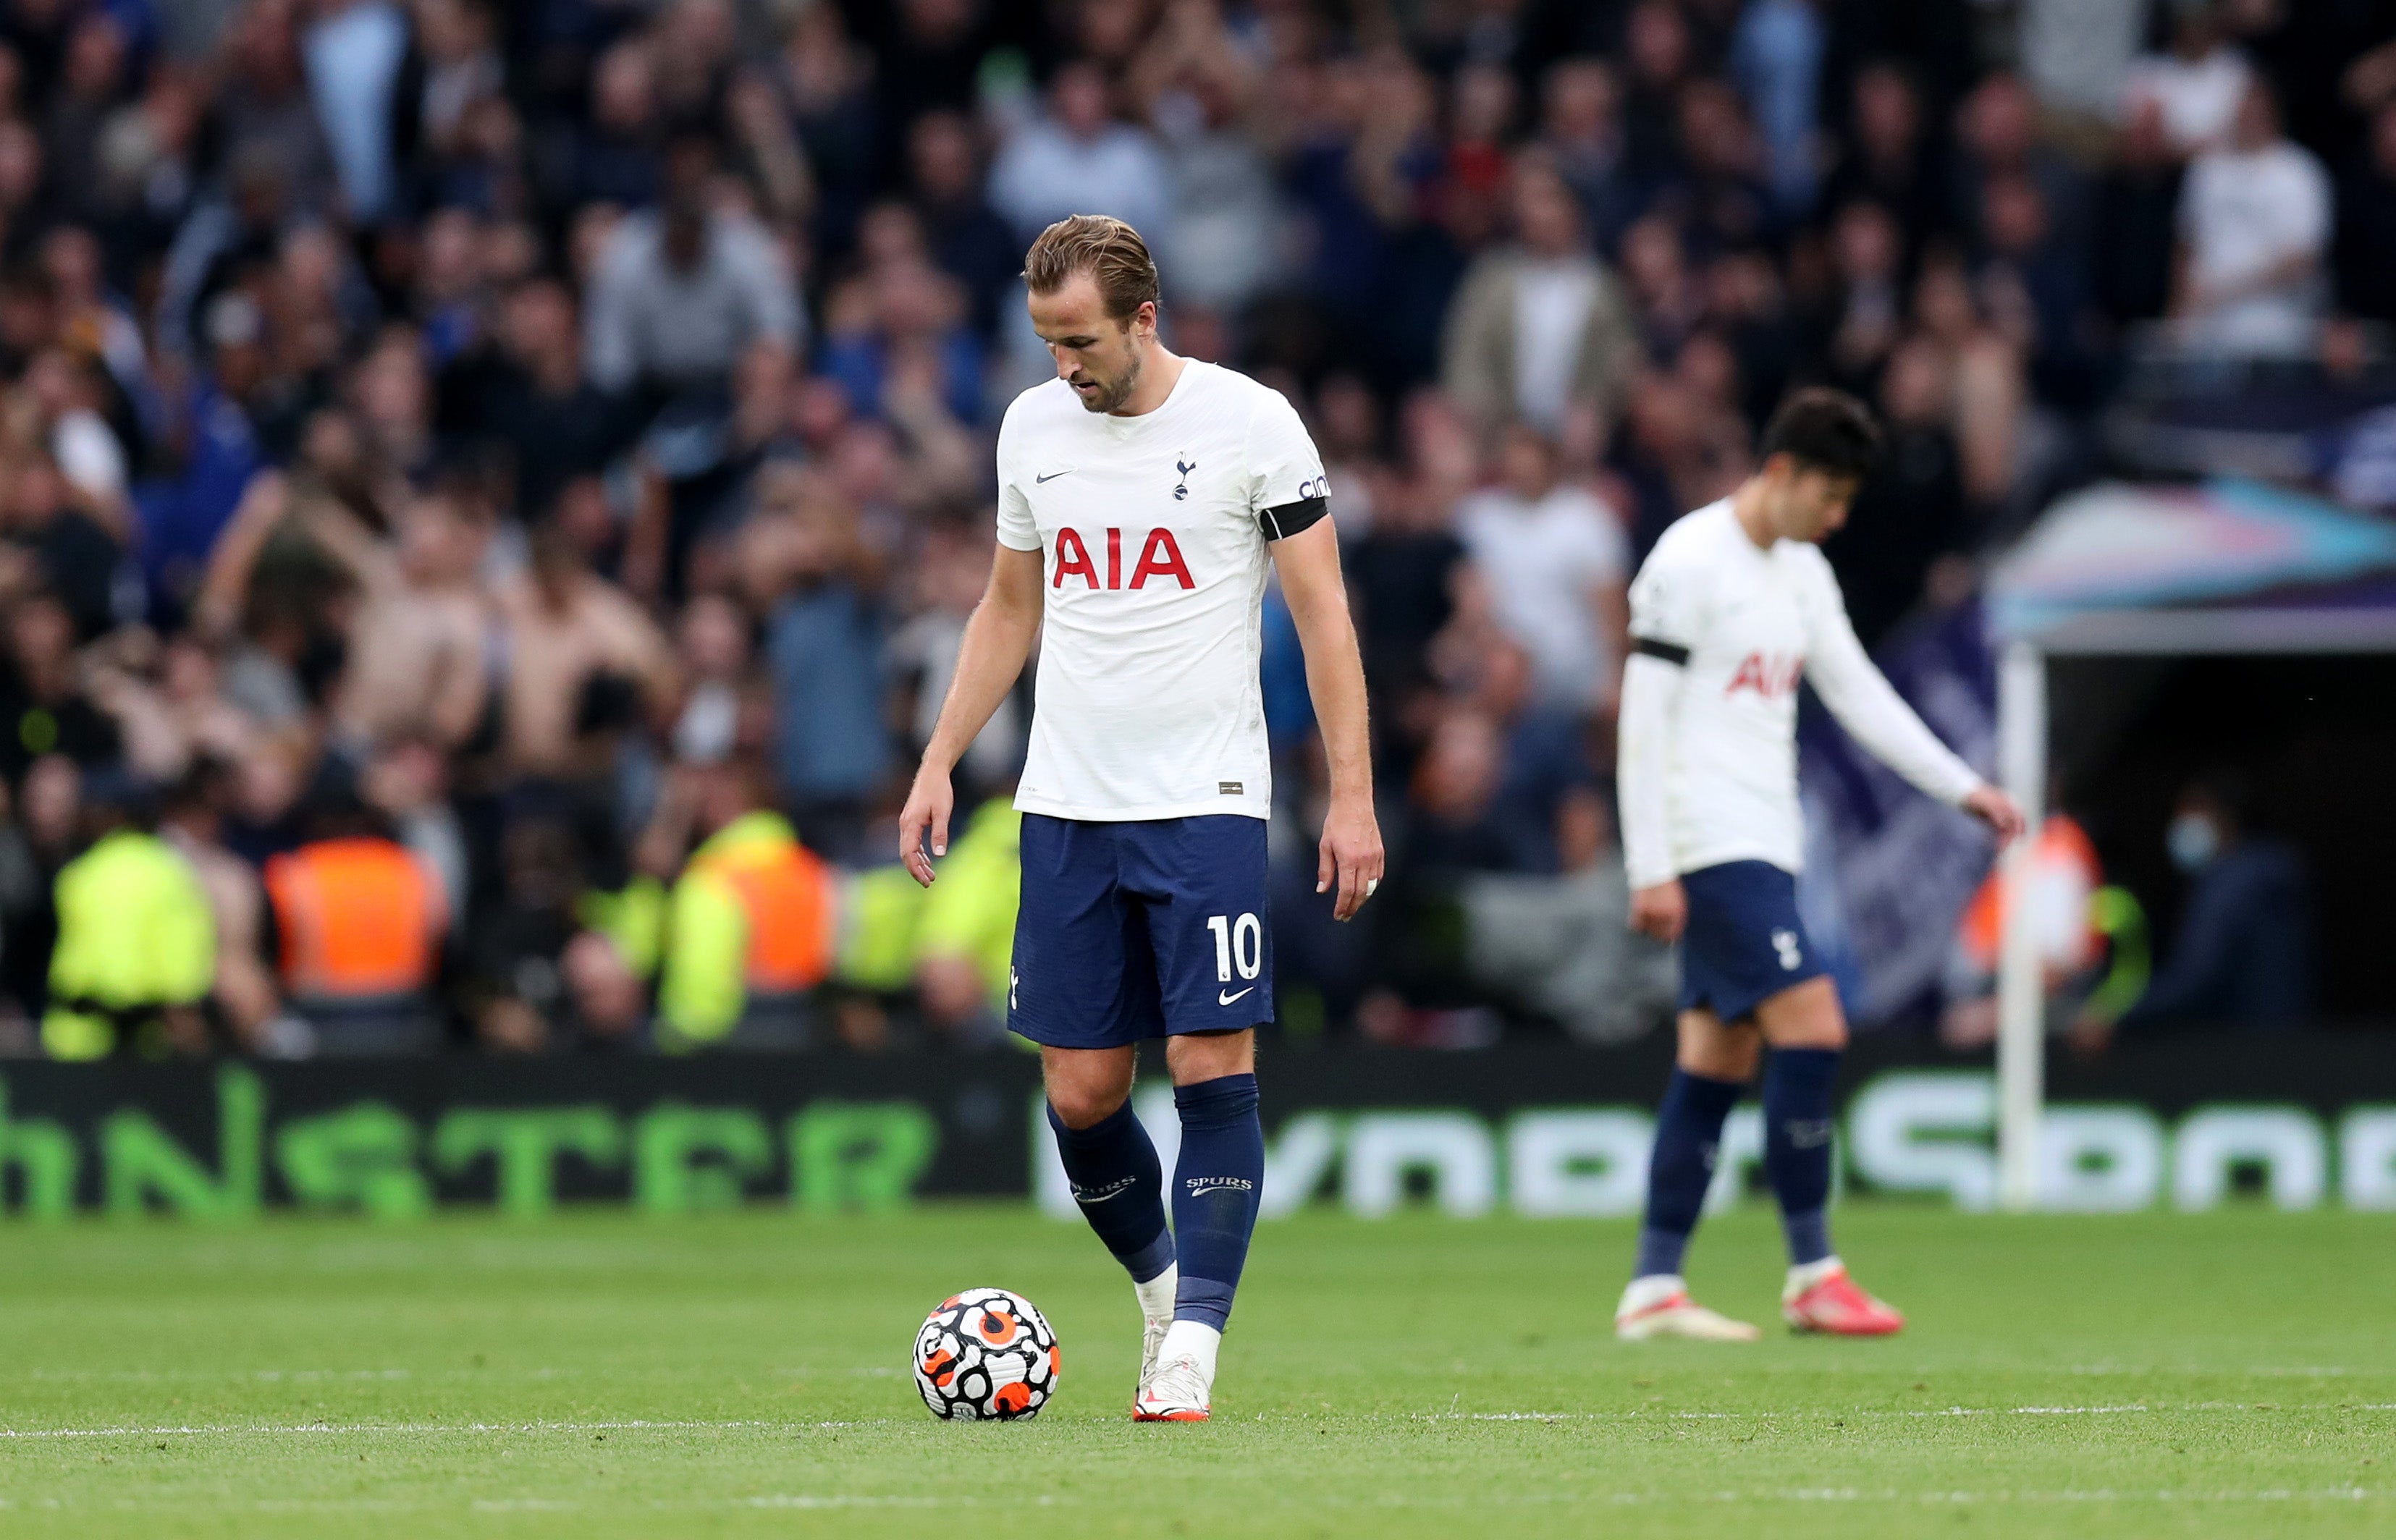 Tottenham striker Harry Kane struggled in the 3-0 defeat by Chelsea